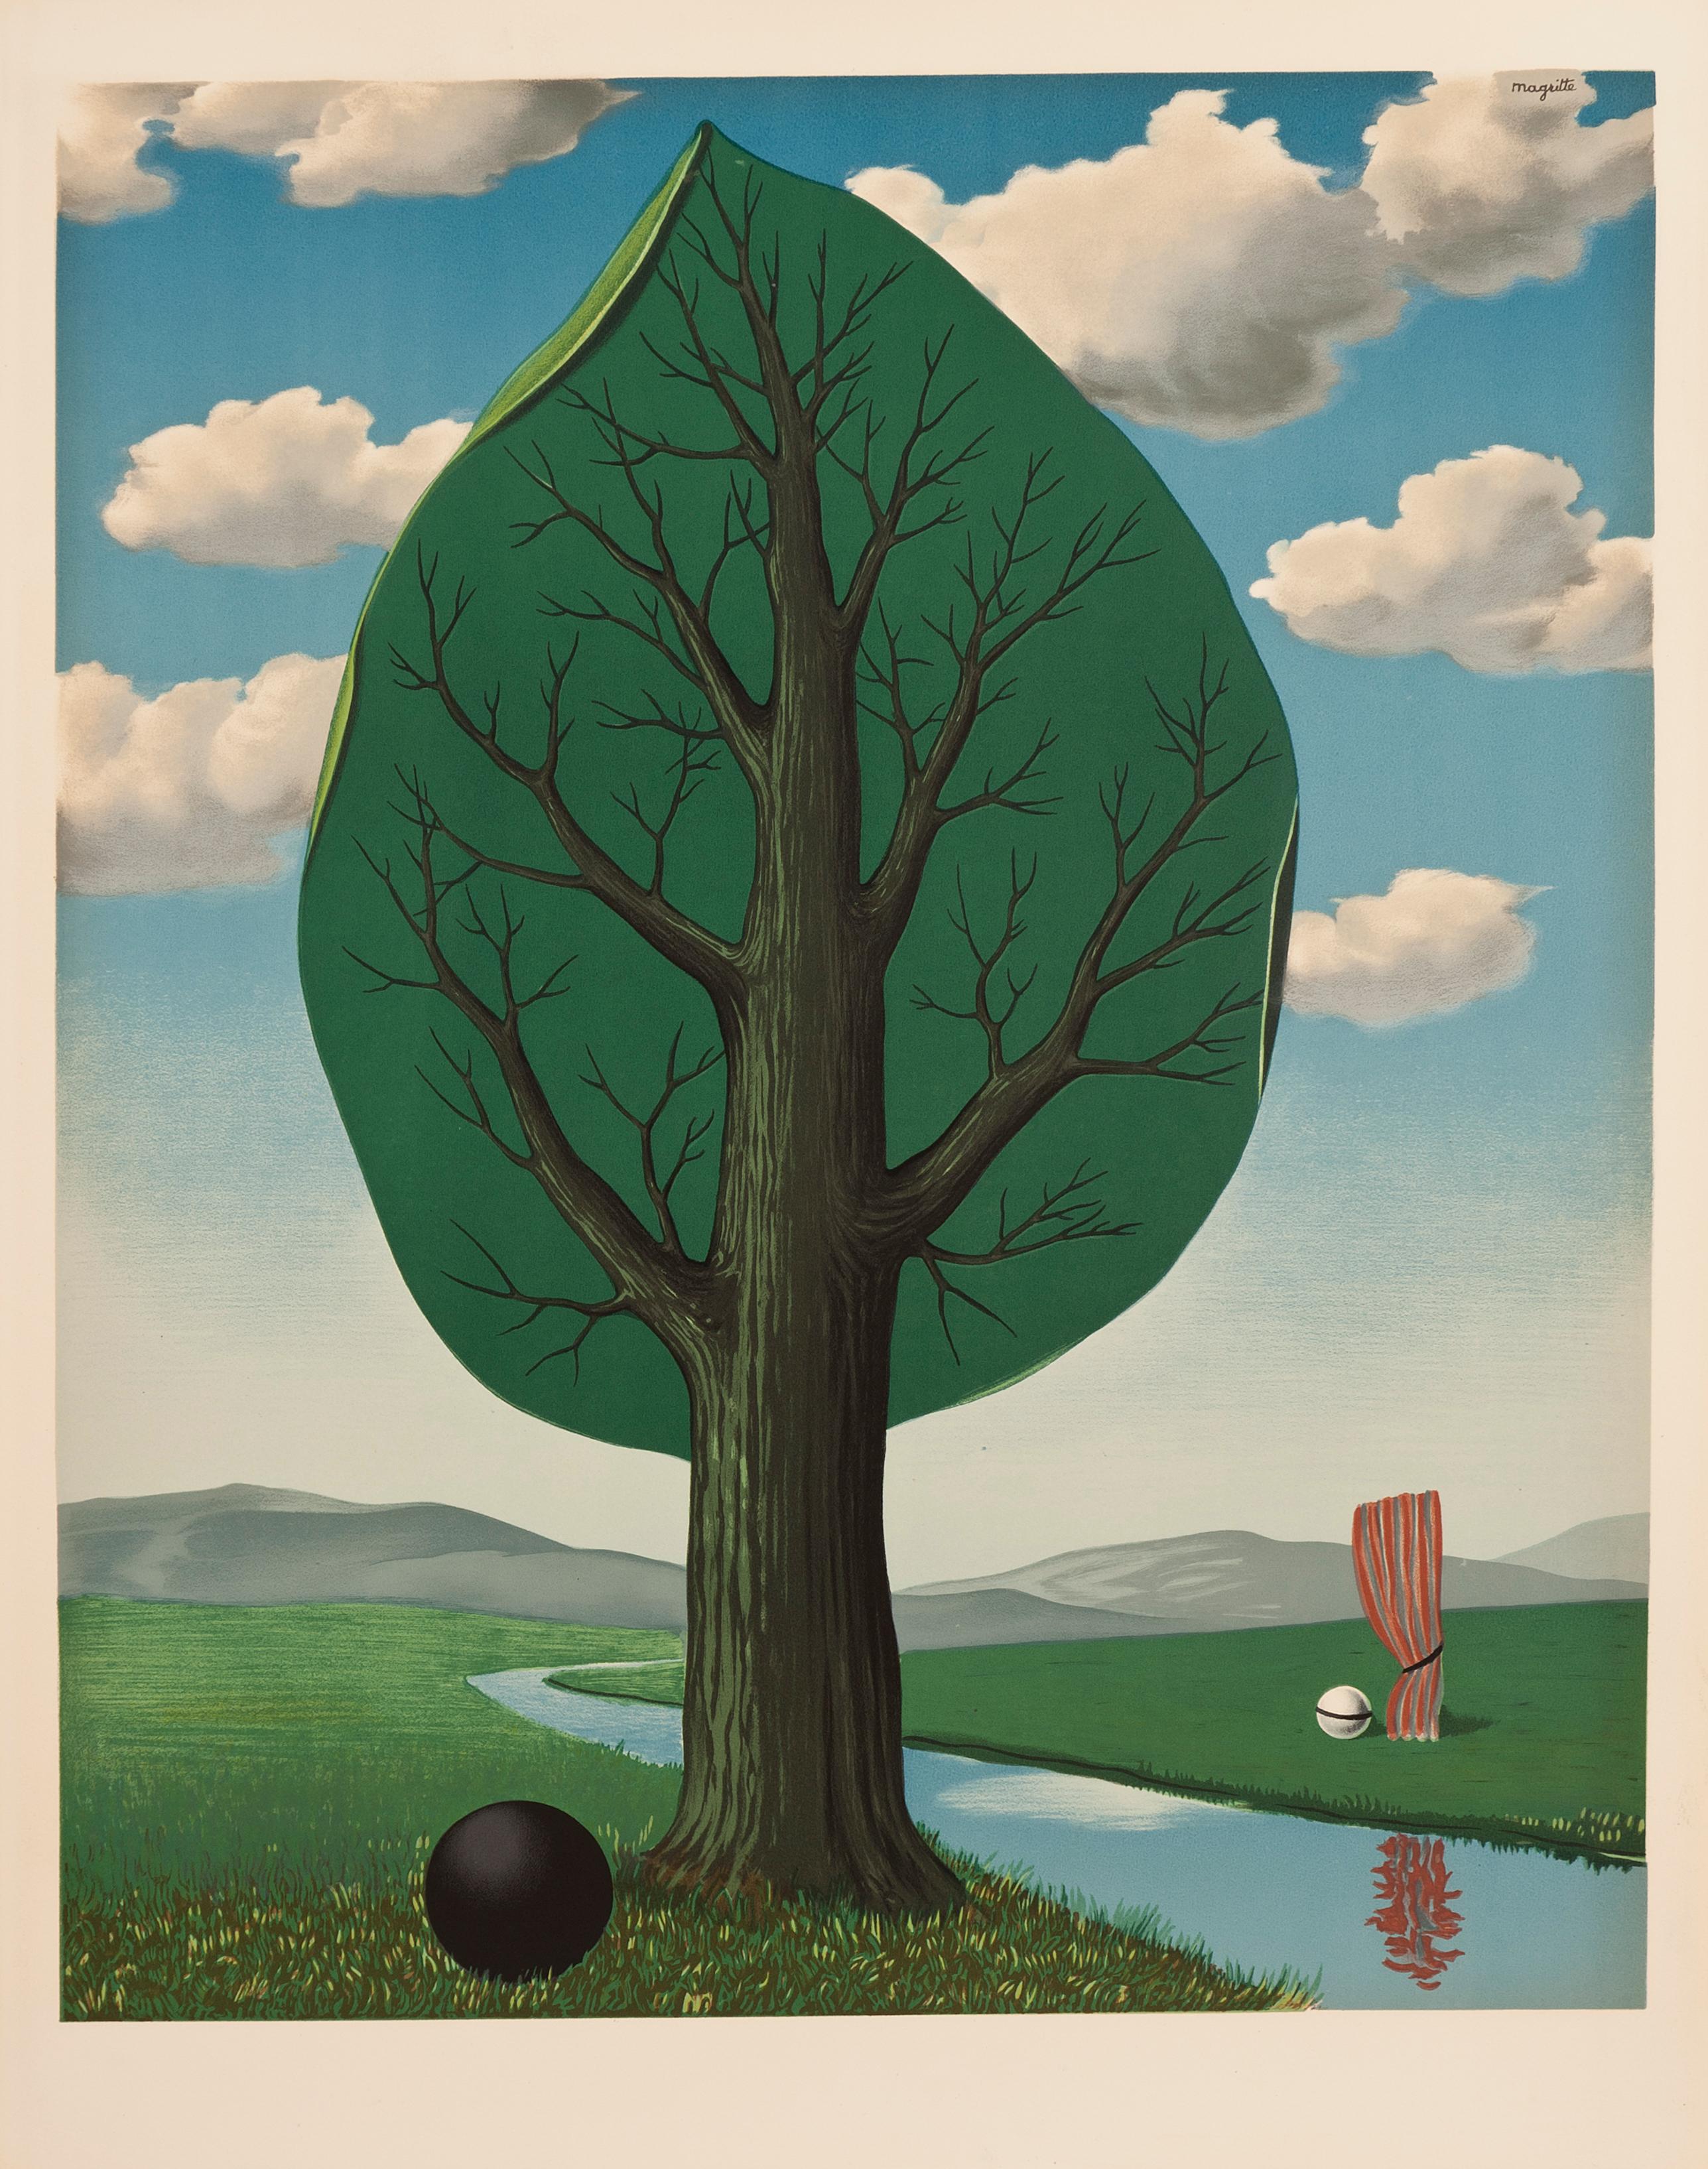 René Magritte Landscape Print - La Geante II by Rene Magritte - Surrealism 